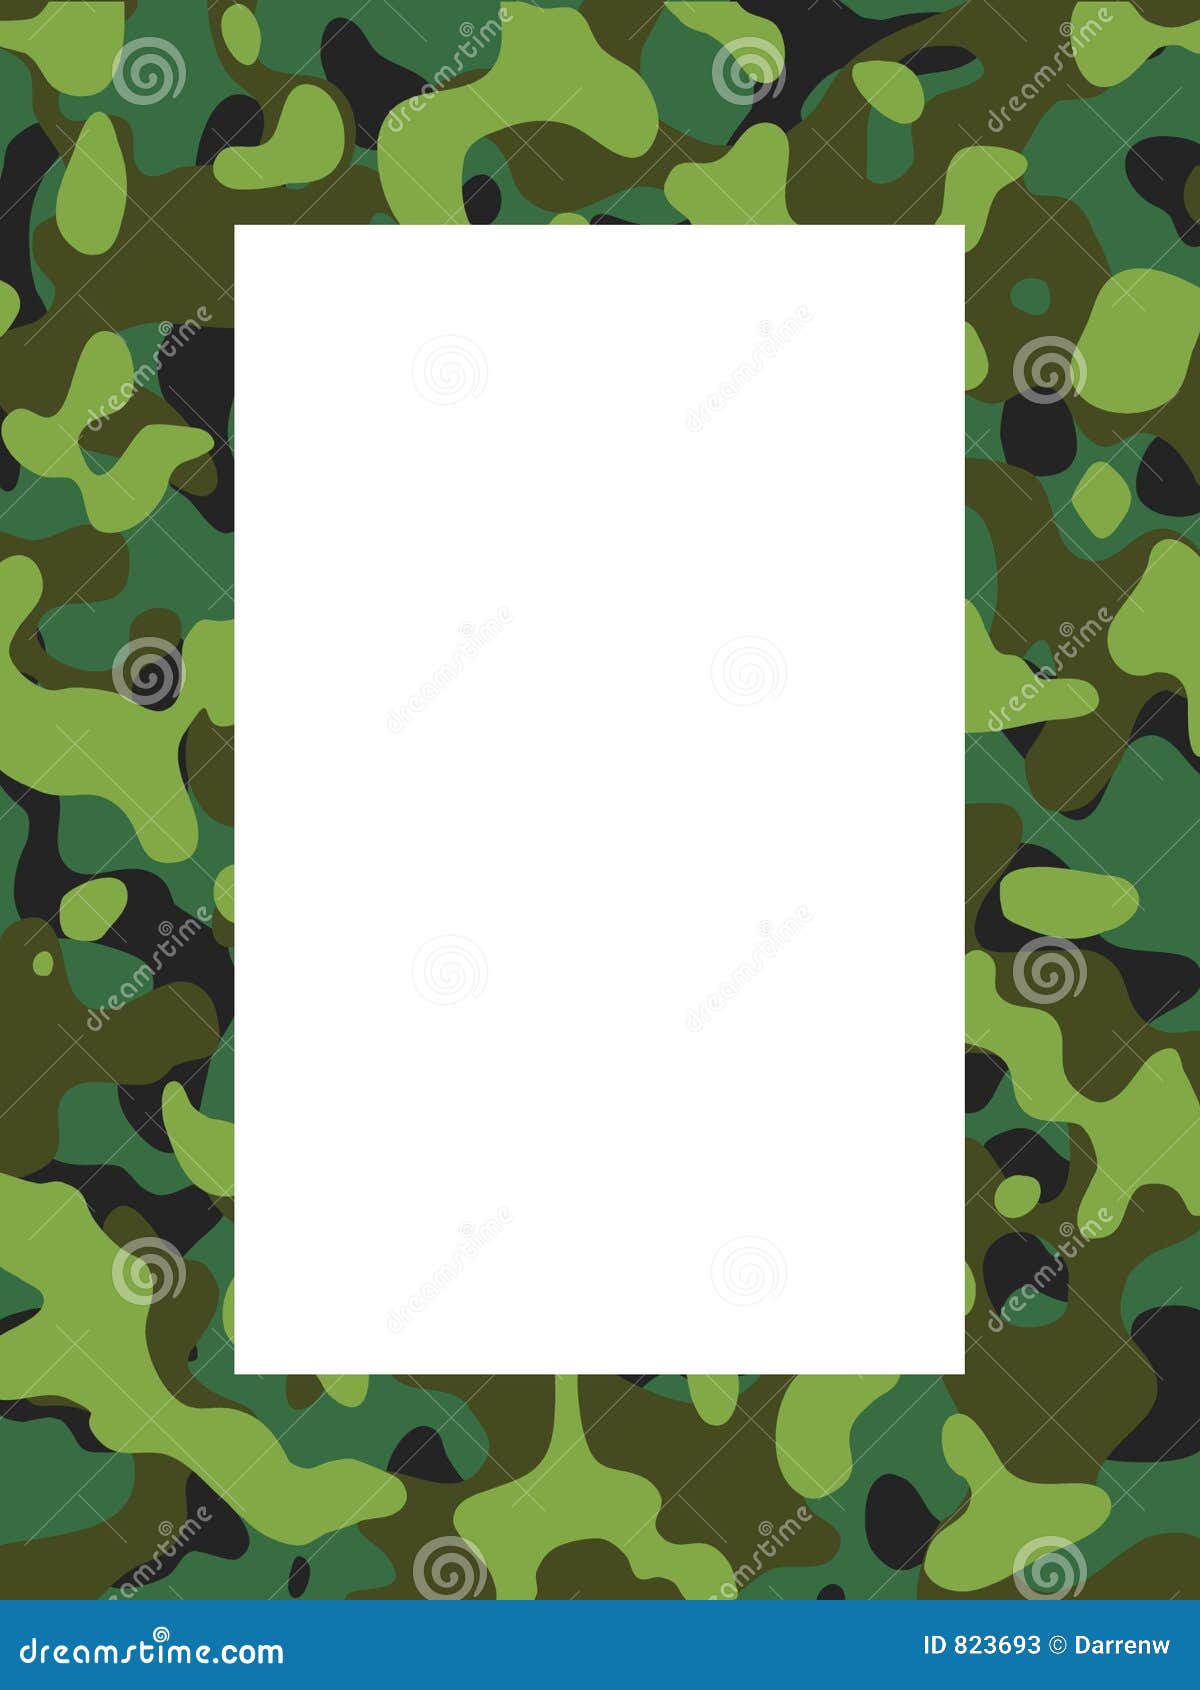 free clip art camouflage border - photo #12